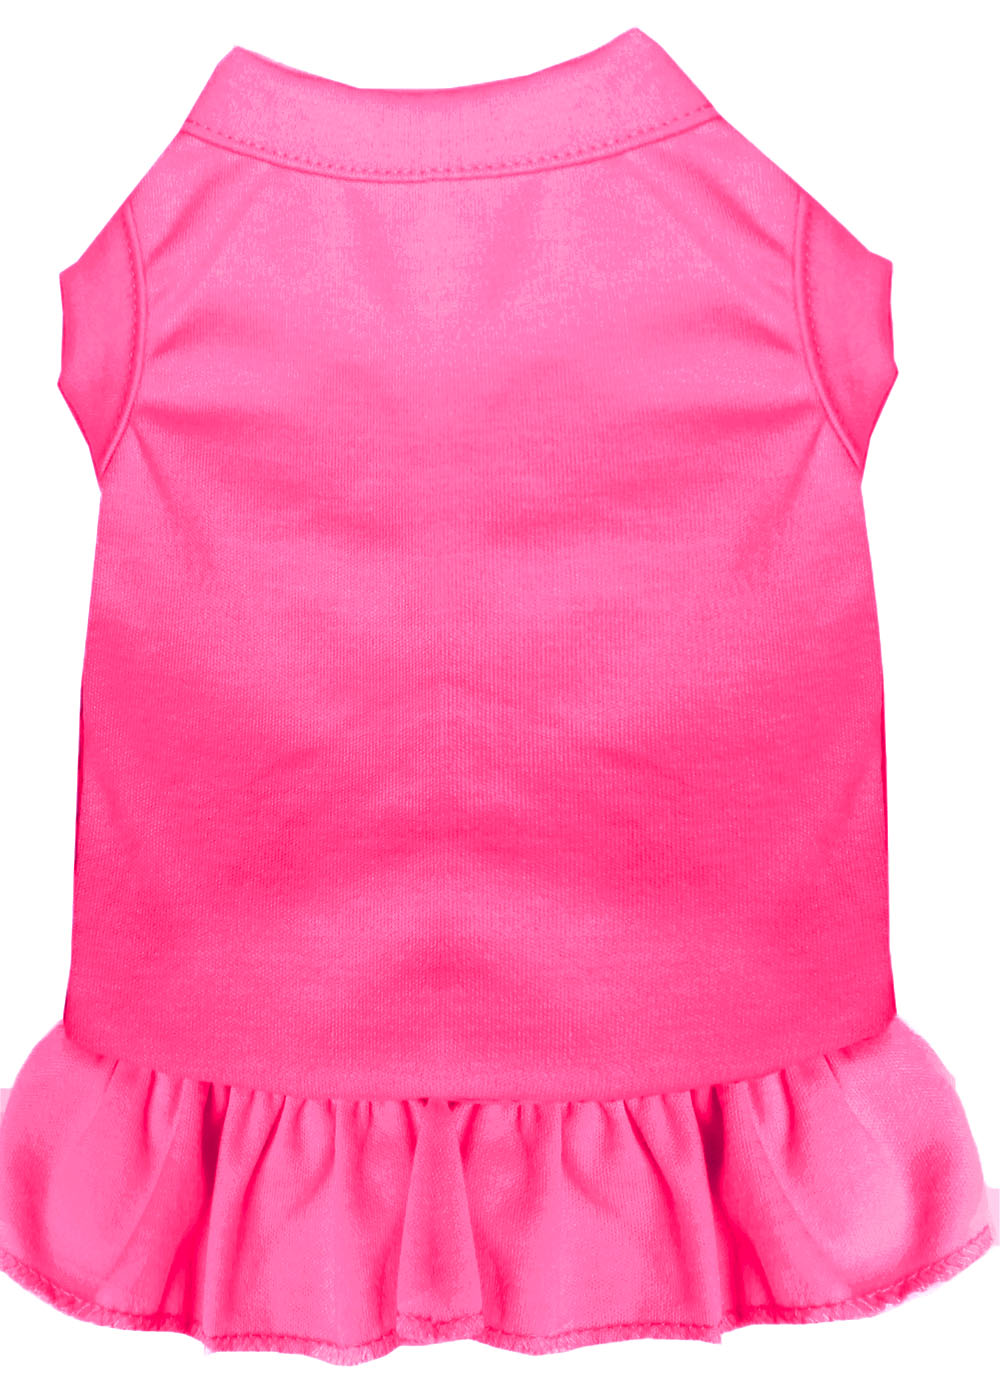 Plain Pet Dress Bright Pink Lg